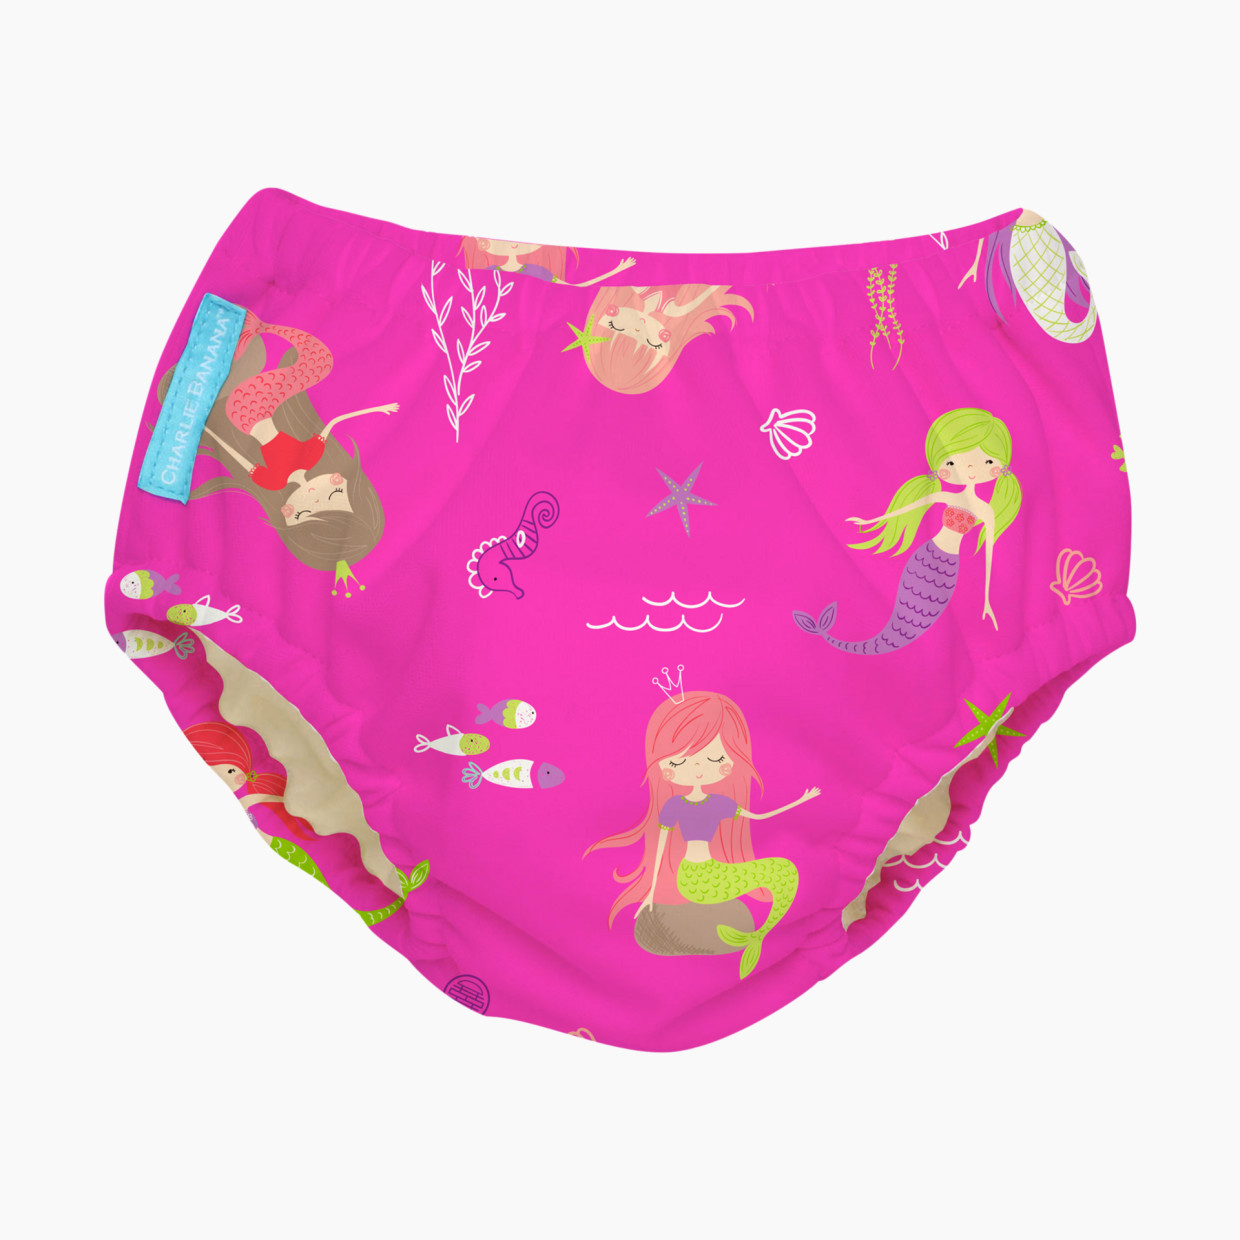 Charlie Banana Reusable Swim Diaper - Mermaid Zoe, Small.